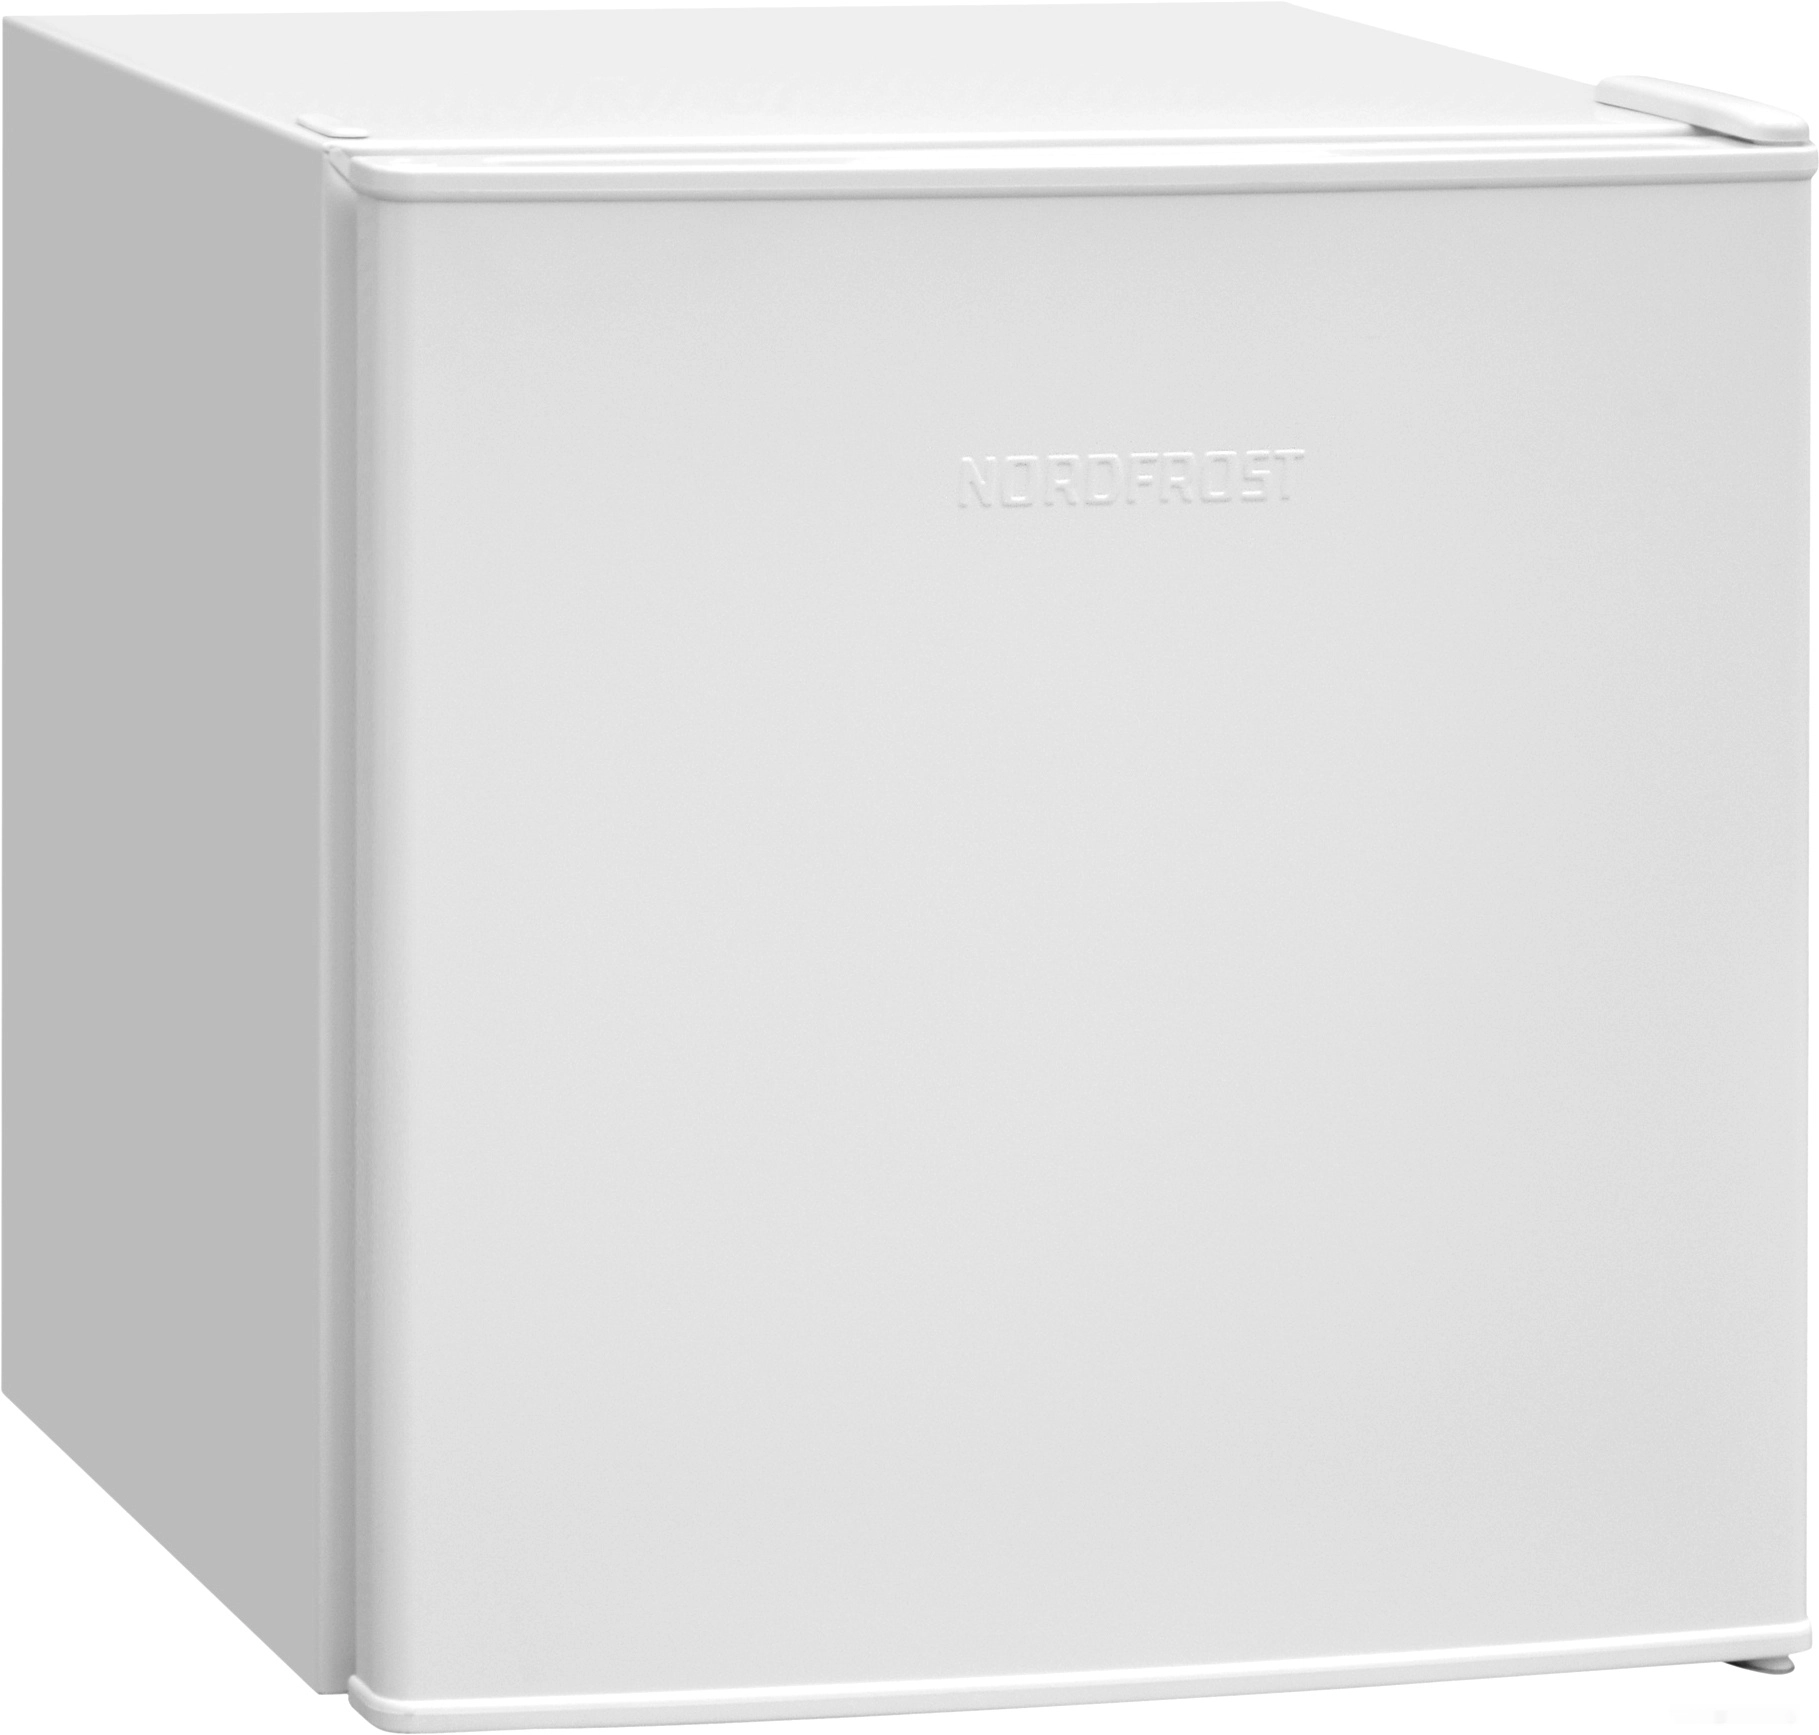 Однокамерный холодильник NORD NR 402 W